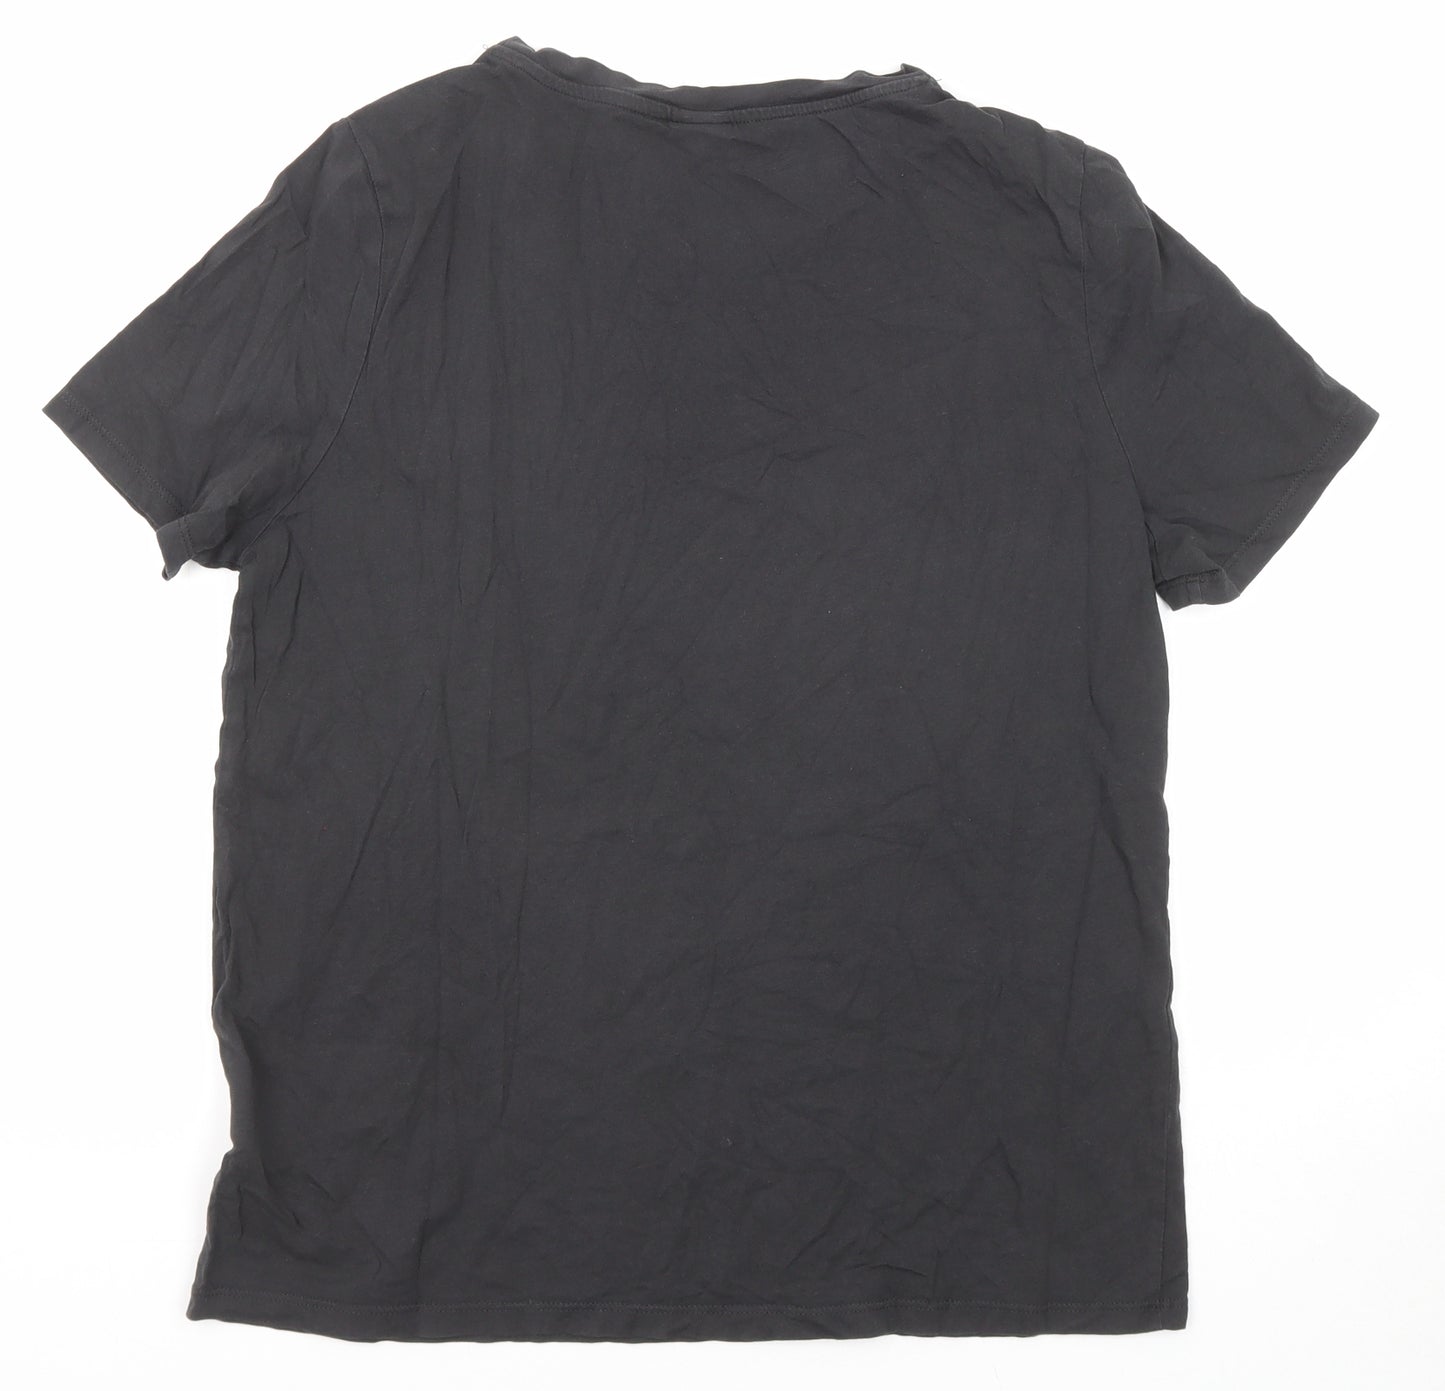 H&M Womens Black Cotton Basic T-Shirt Size M Round Neck - Sea Shop